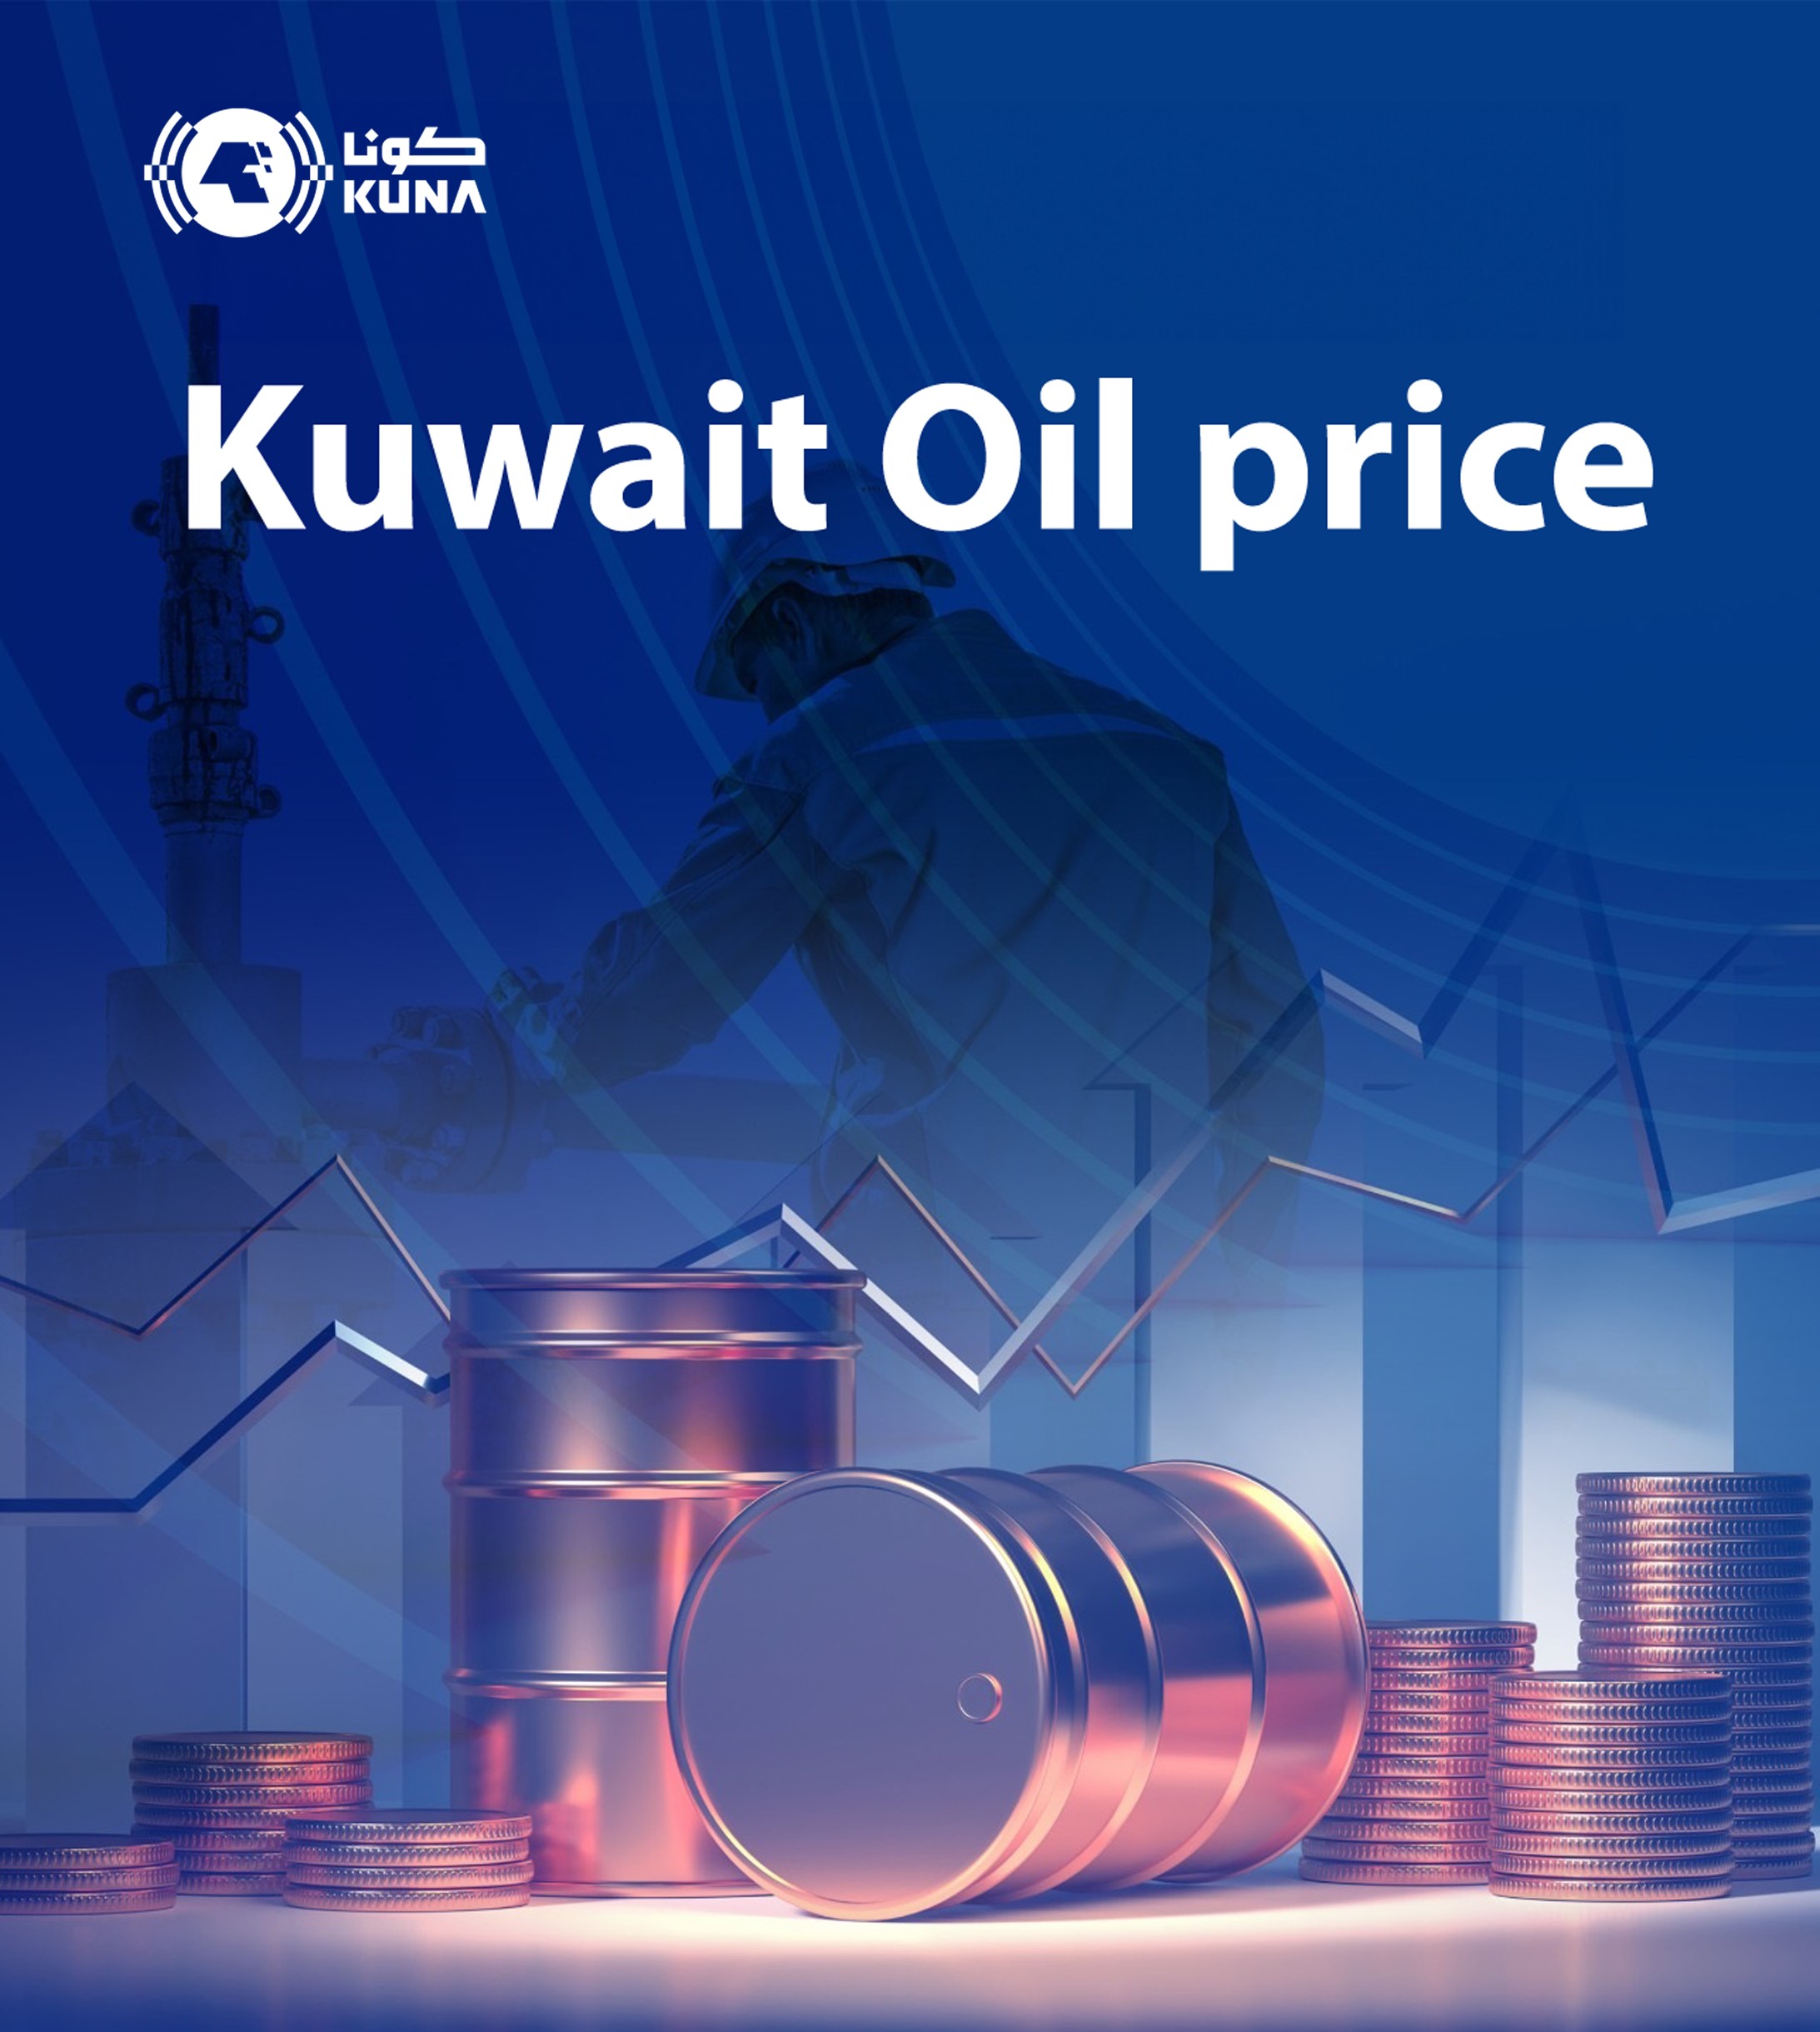 Kuwait oil price rises to USD 89.46 pb                                                                                                                                                                                                                    